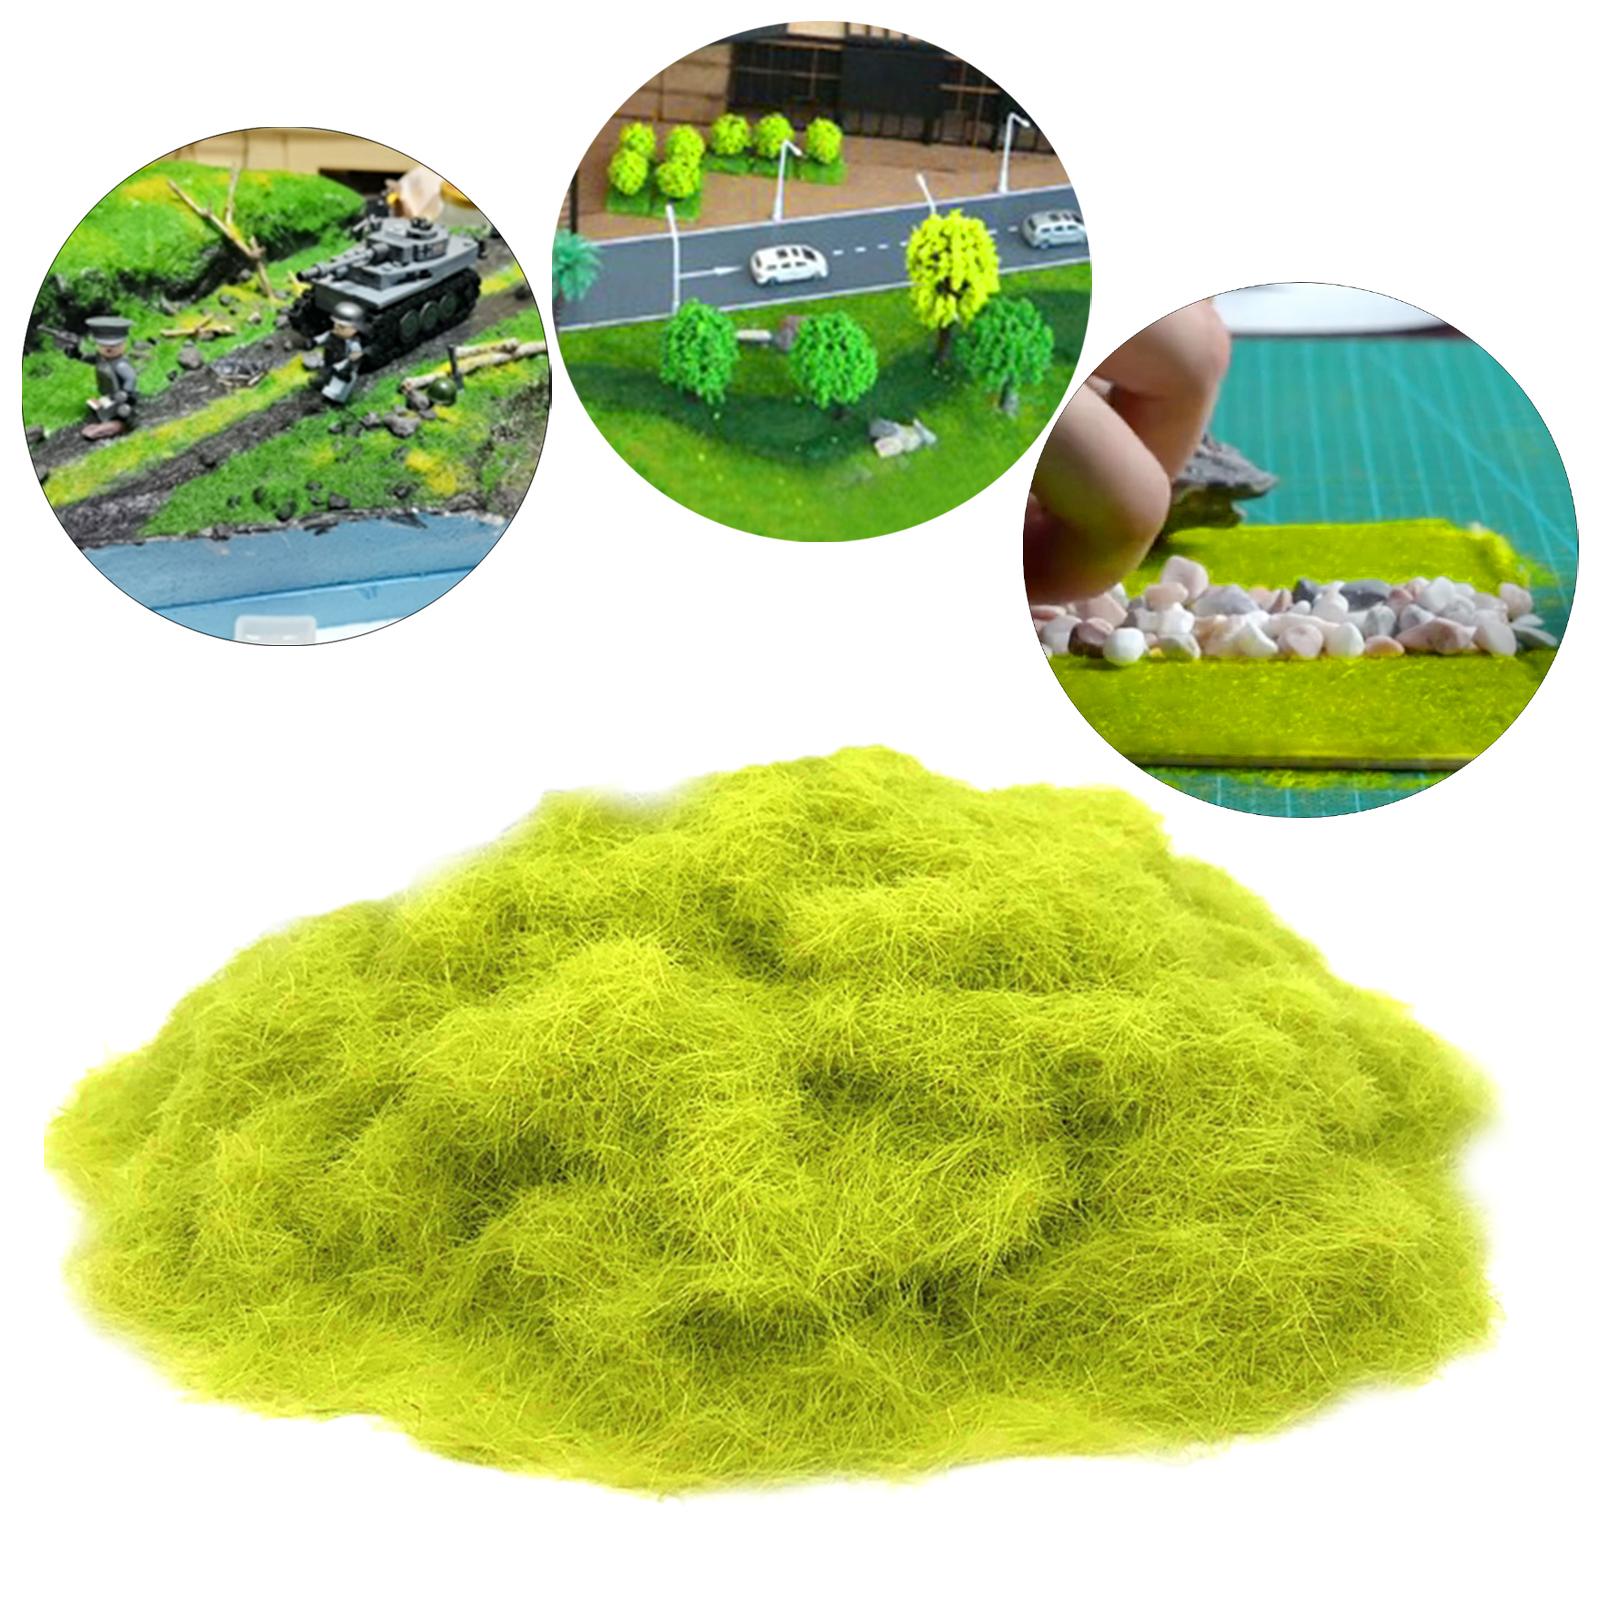 Miniature Static Grass 5mm Fairy Garden Scene Model Sand Table Grass Powder yellow-green